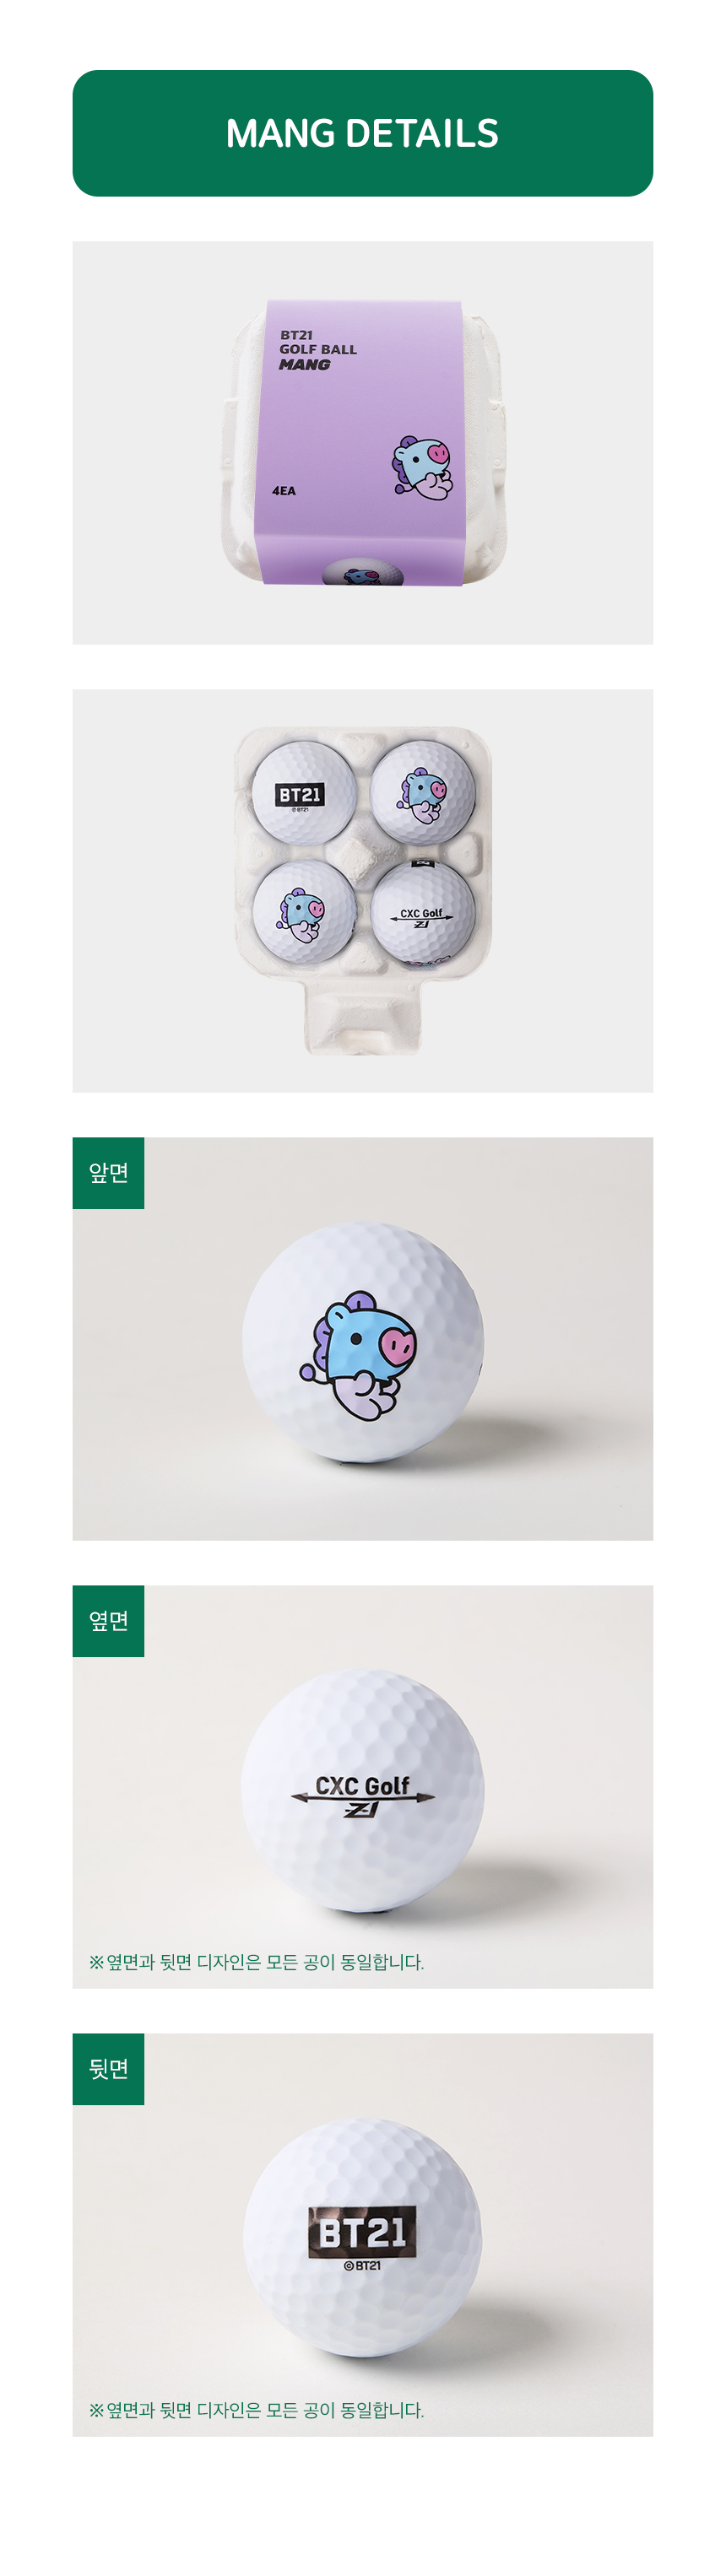 baby_golf_ball_4ea_detail_mang.jpg